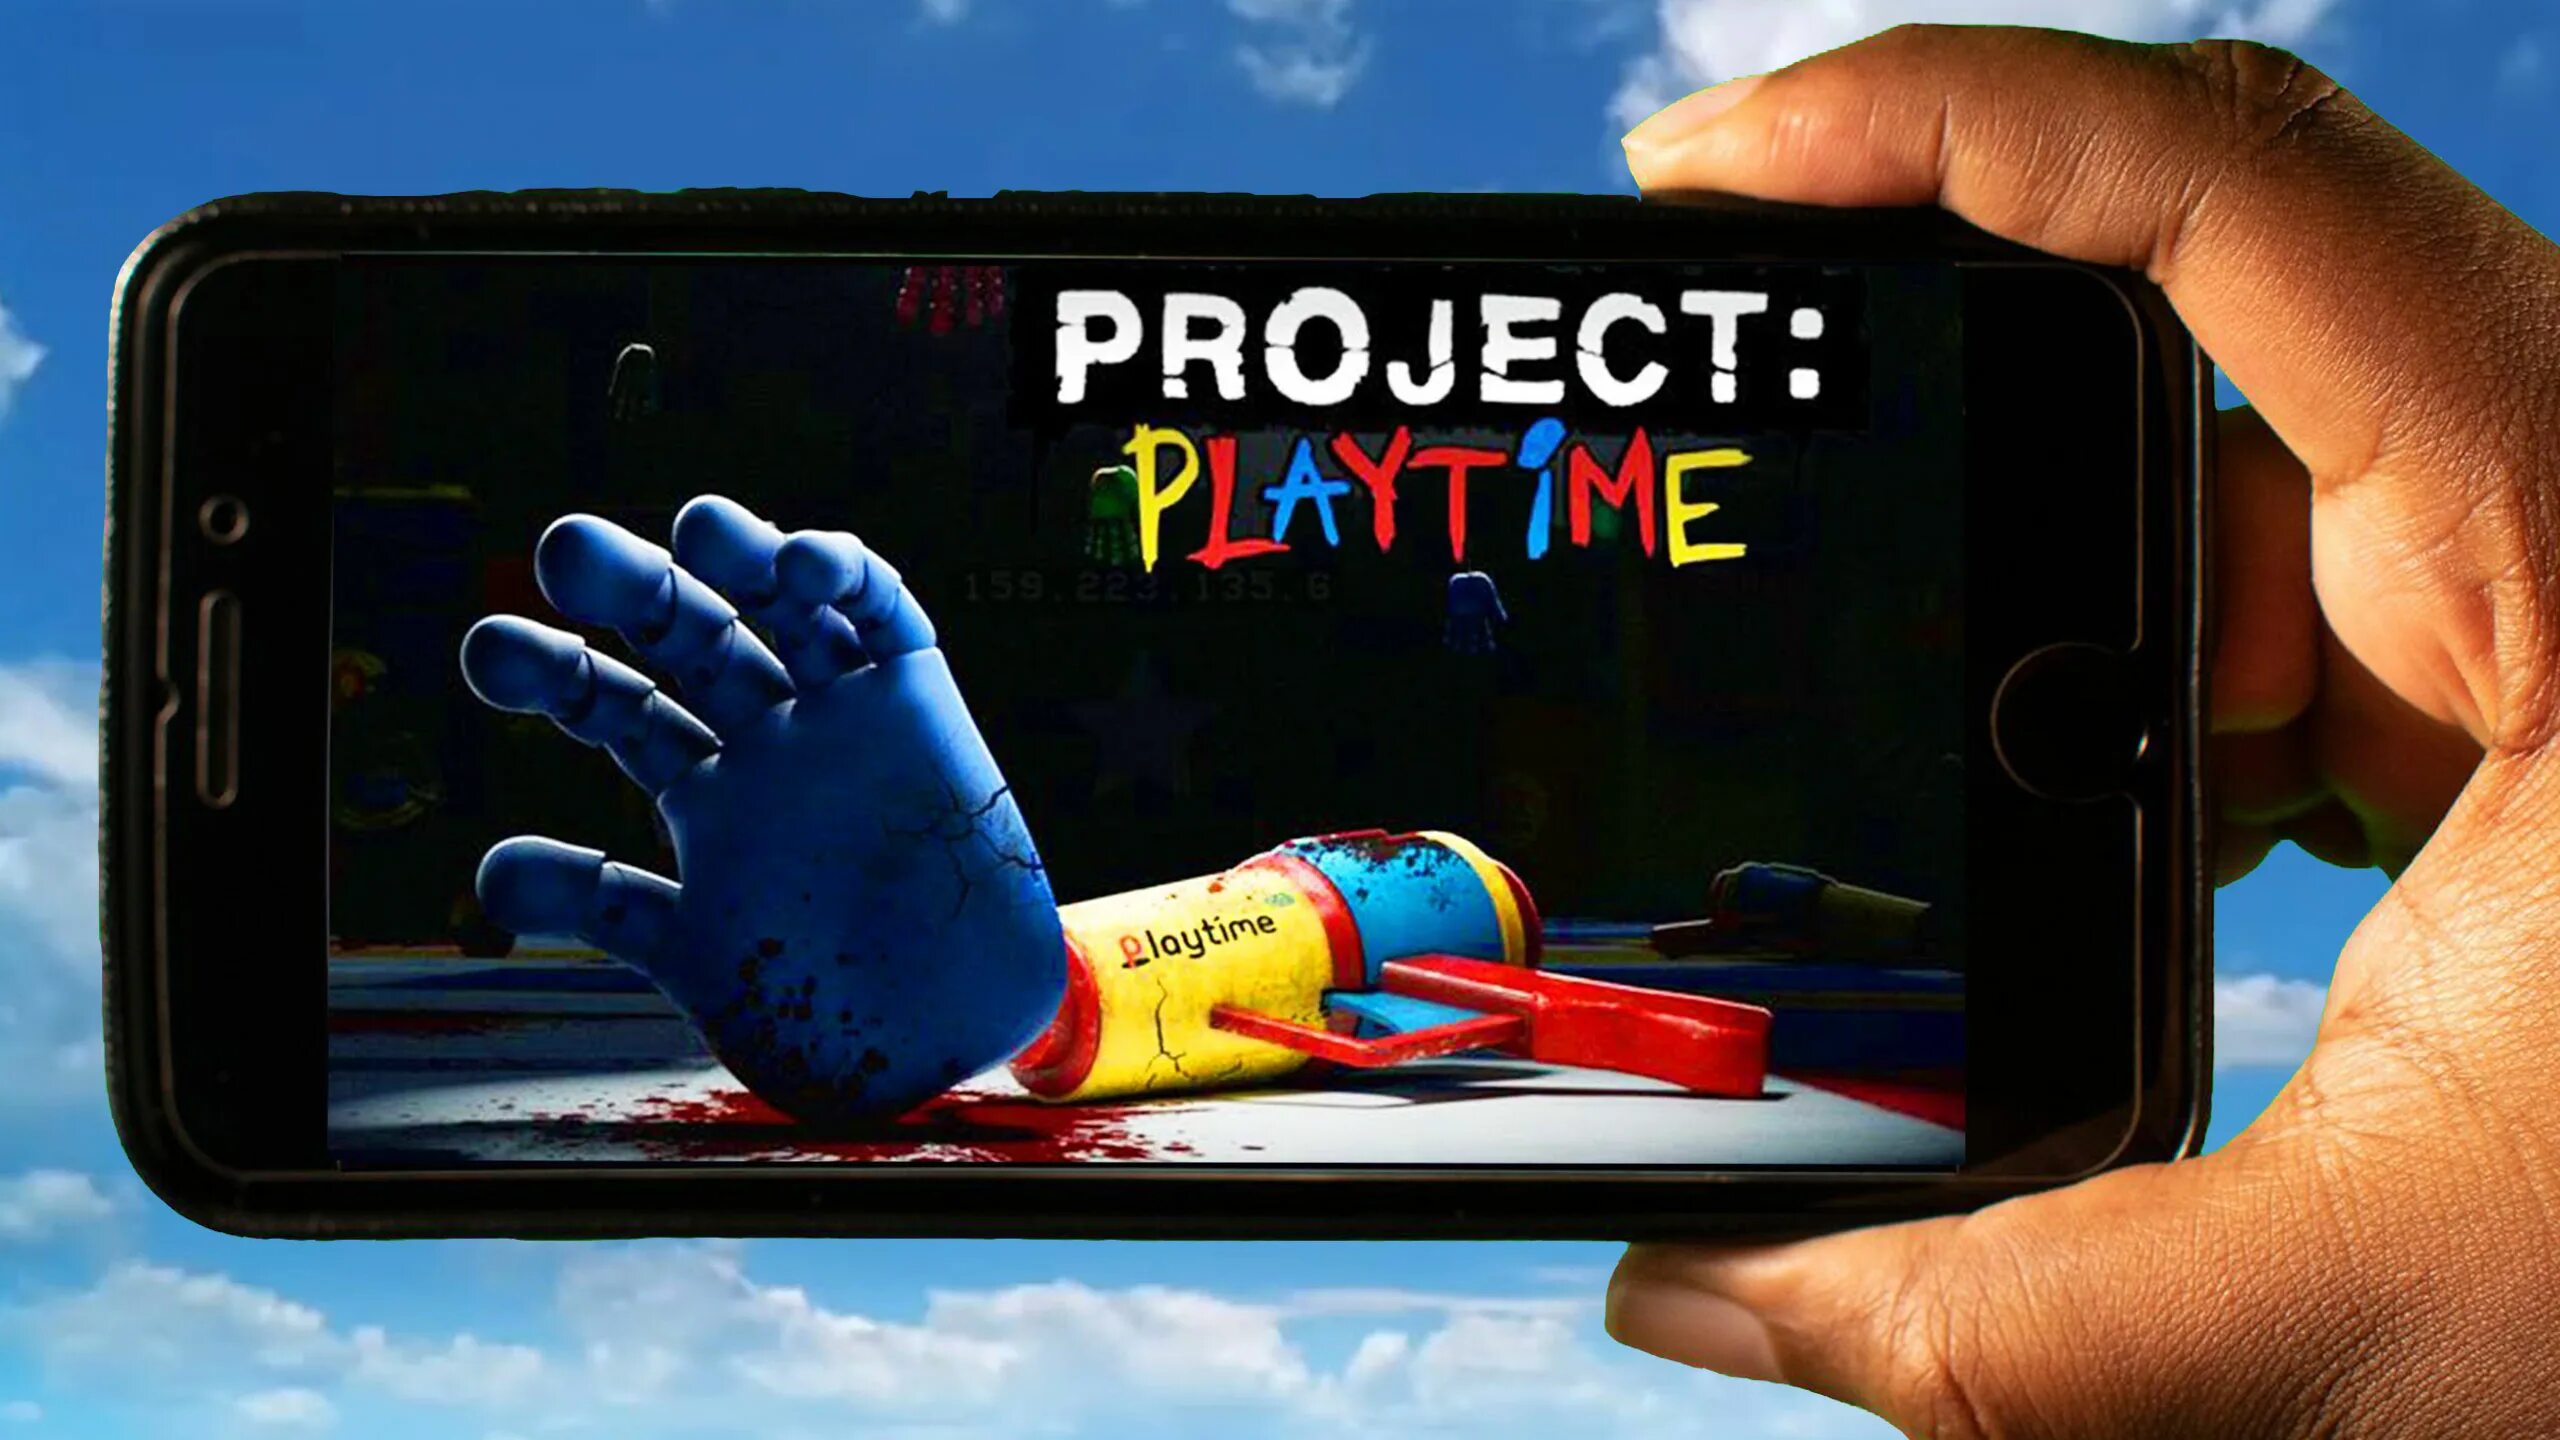 Проджект Плэйтайм. Project Playtime тикеты. Проект Play time mobile. Project Playtime Mob. Project playtime mobile на андроид